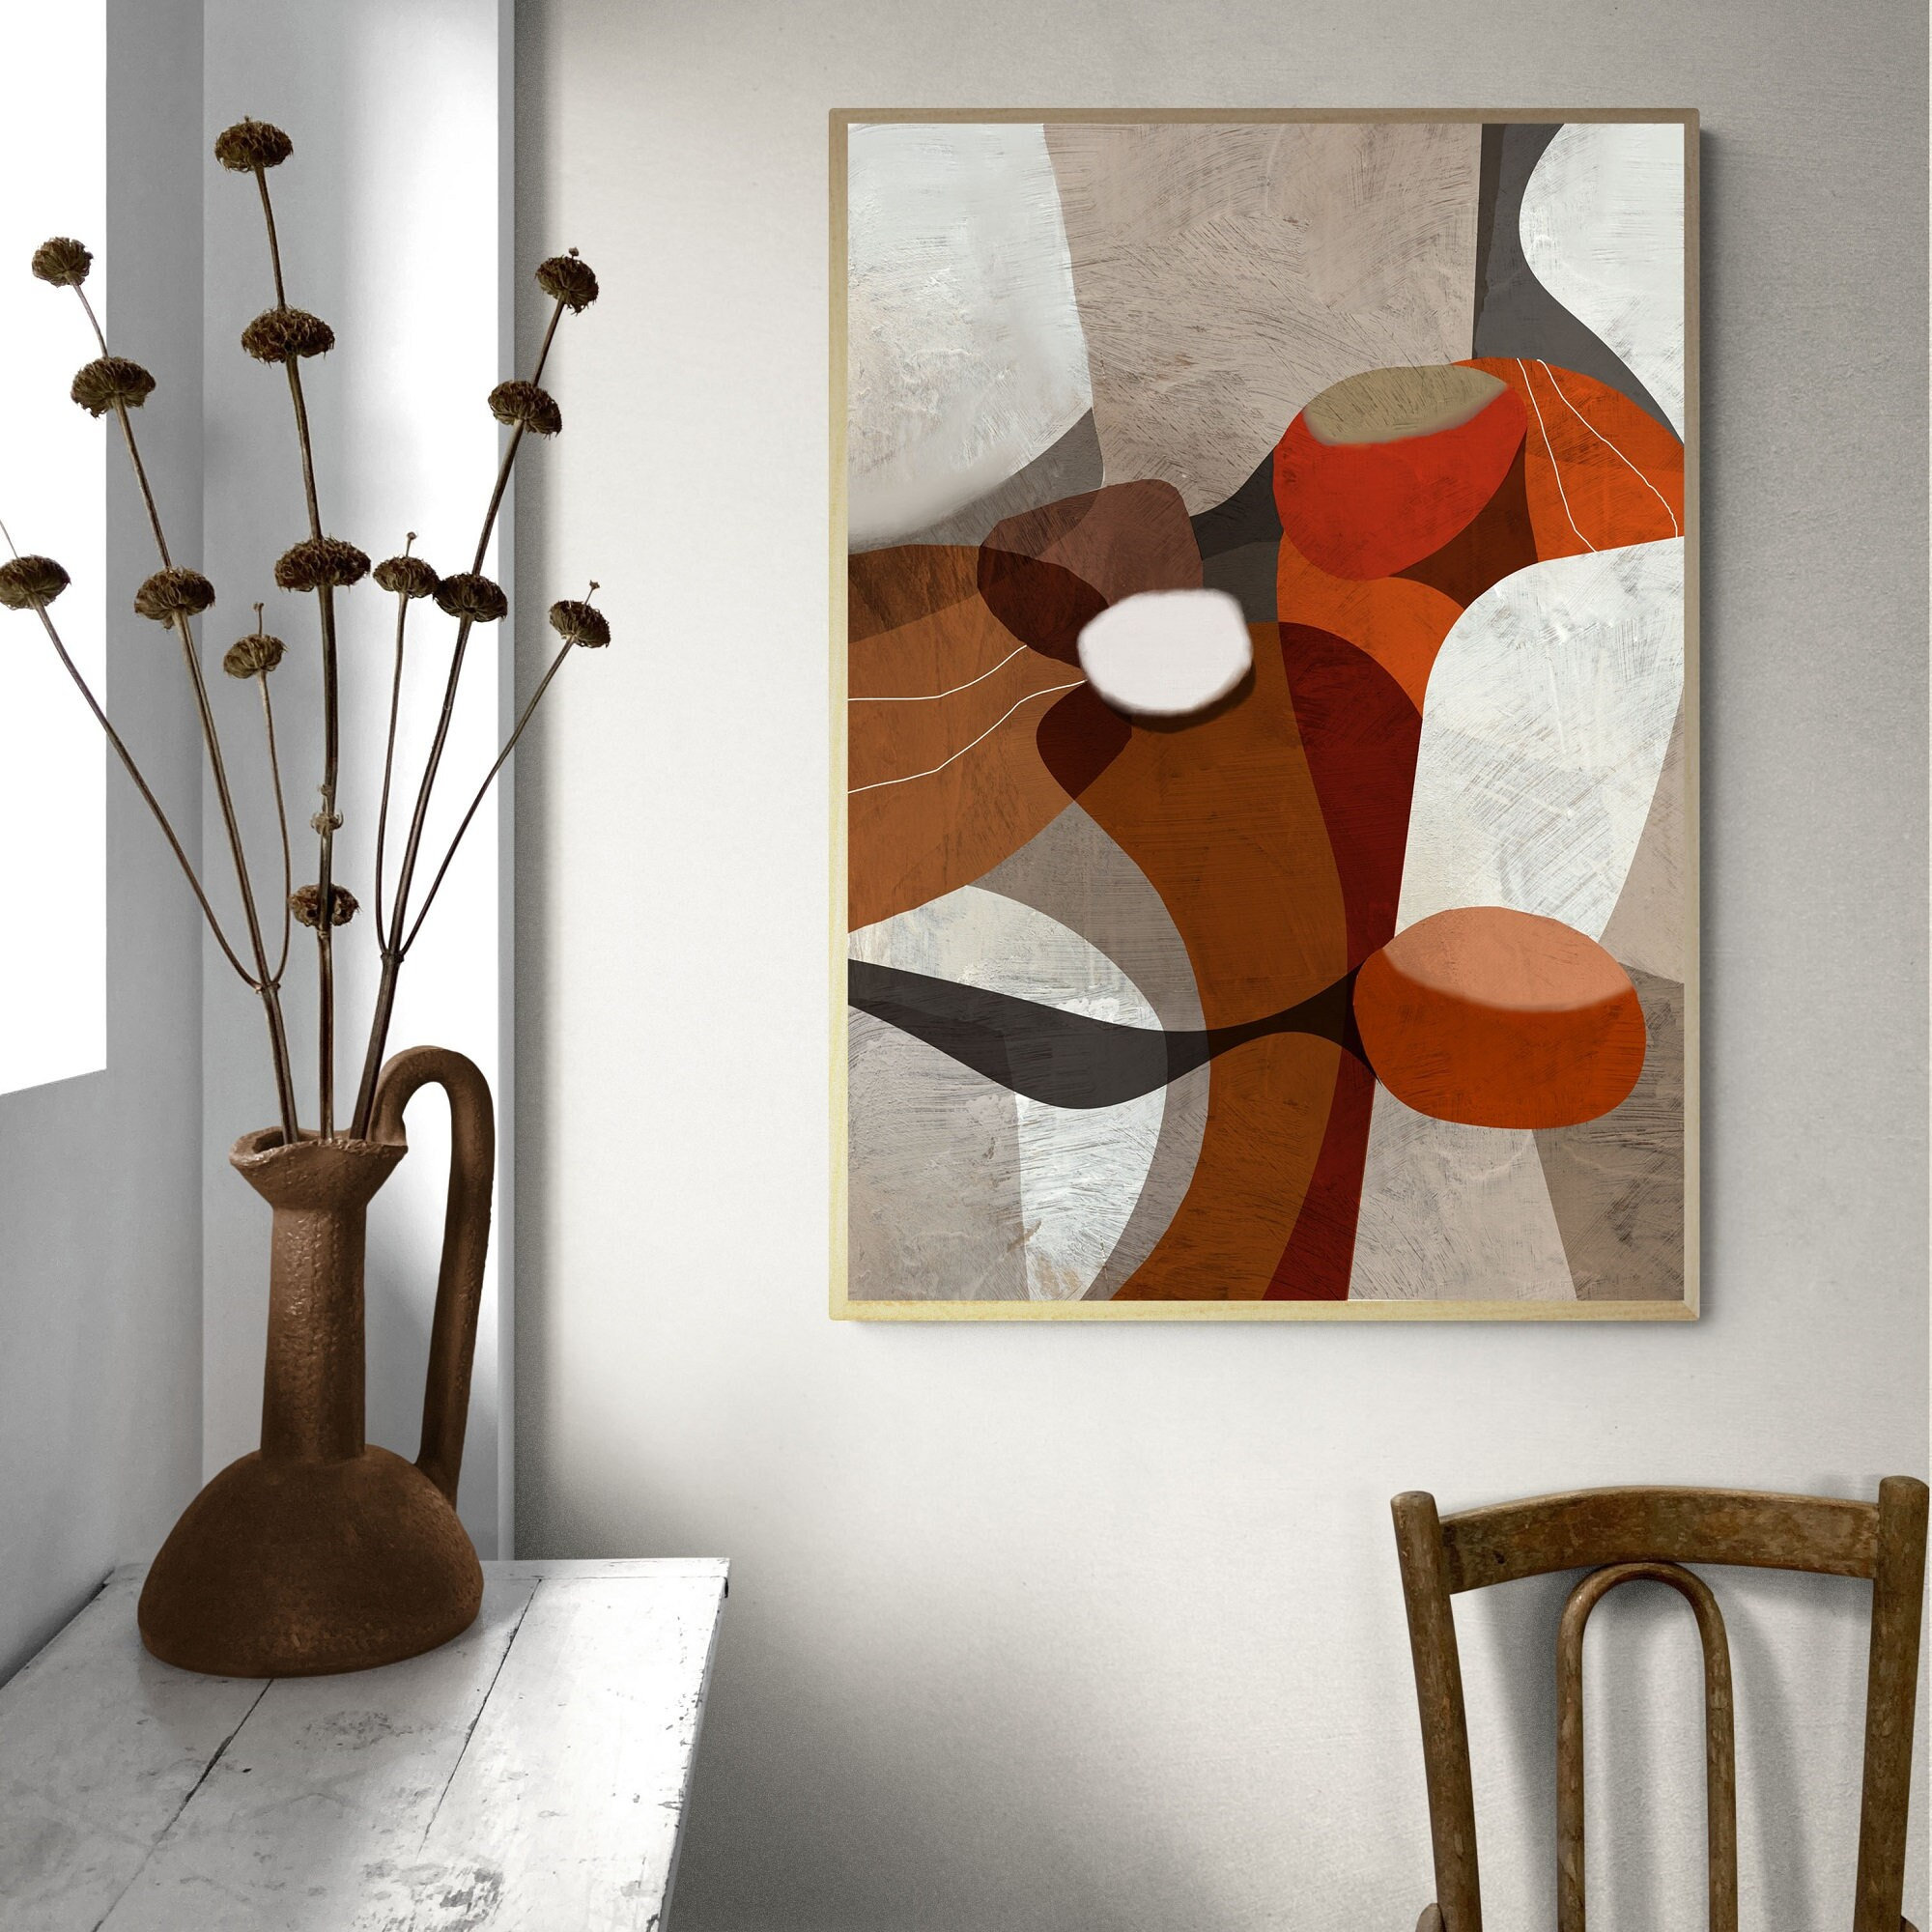 Orange and Grey Paint Splatter Art Board Print for Sale by BigTexFunk